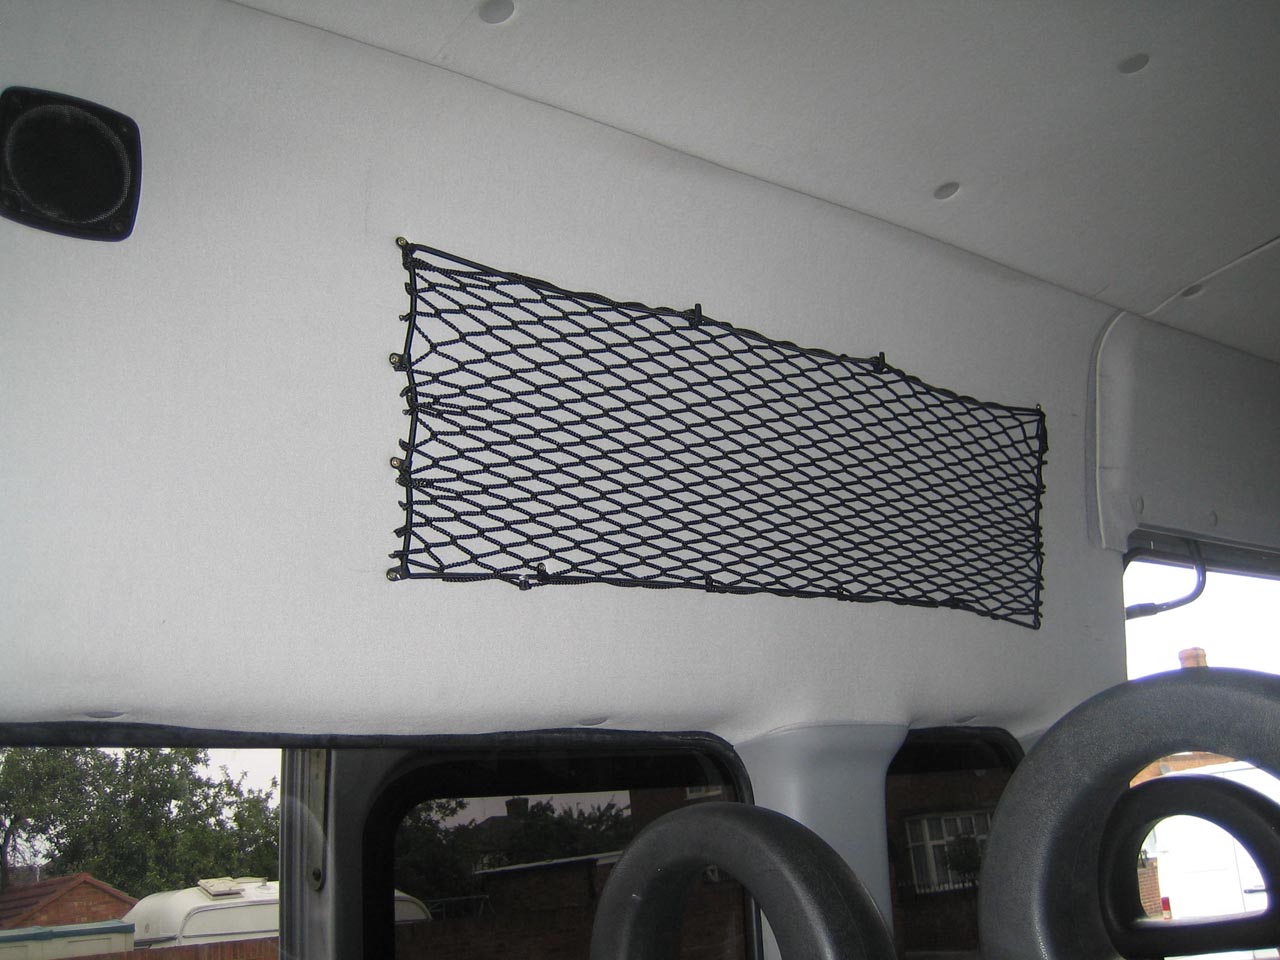 Bespoke elastic net to create storage space on the inside of a van